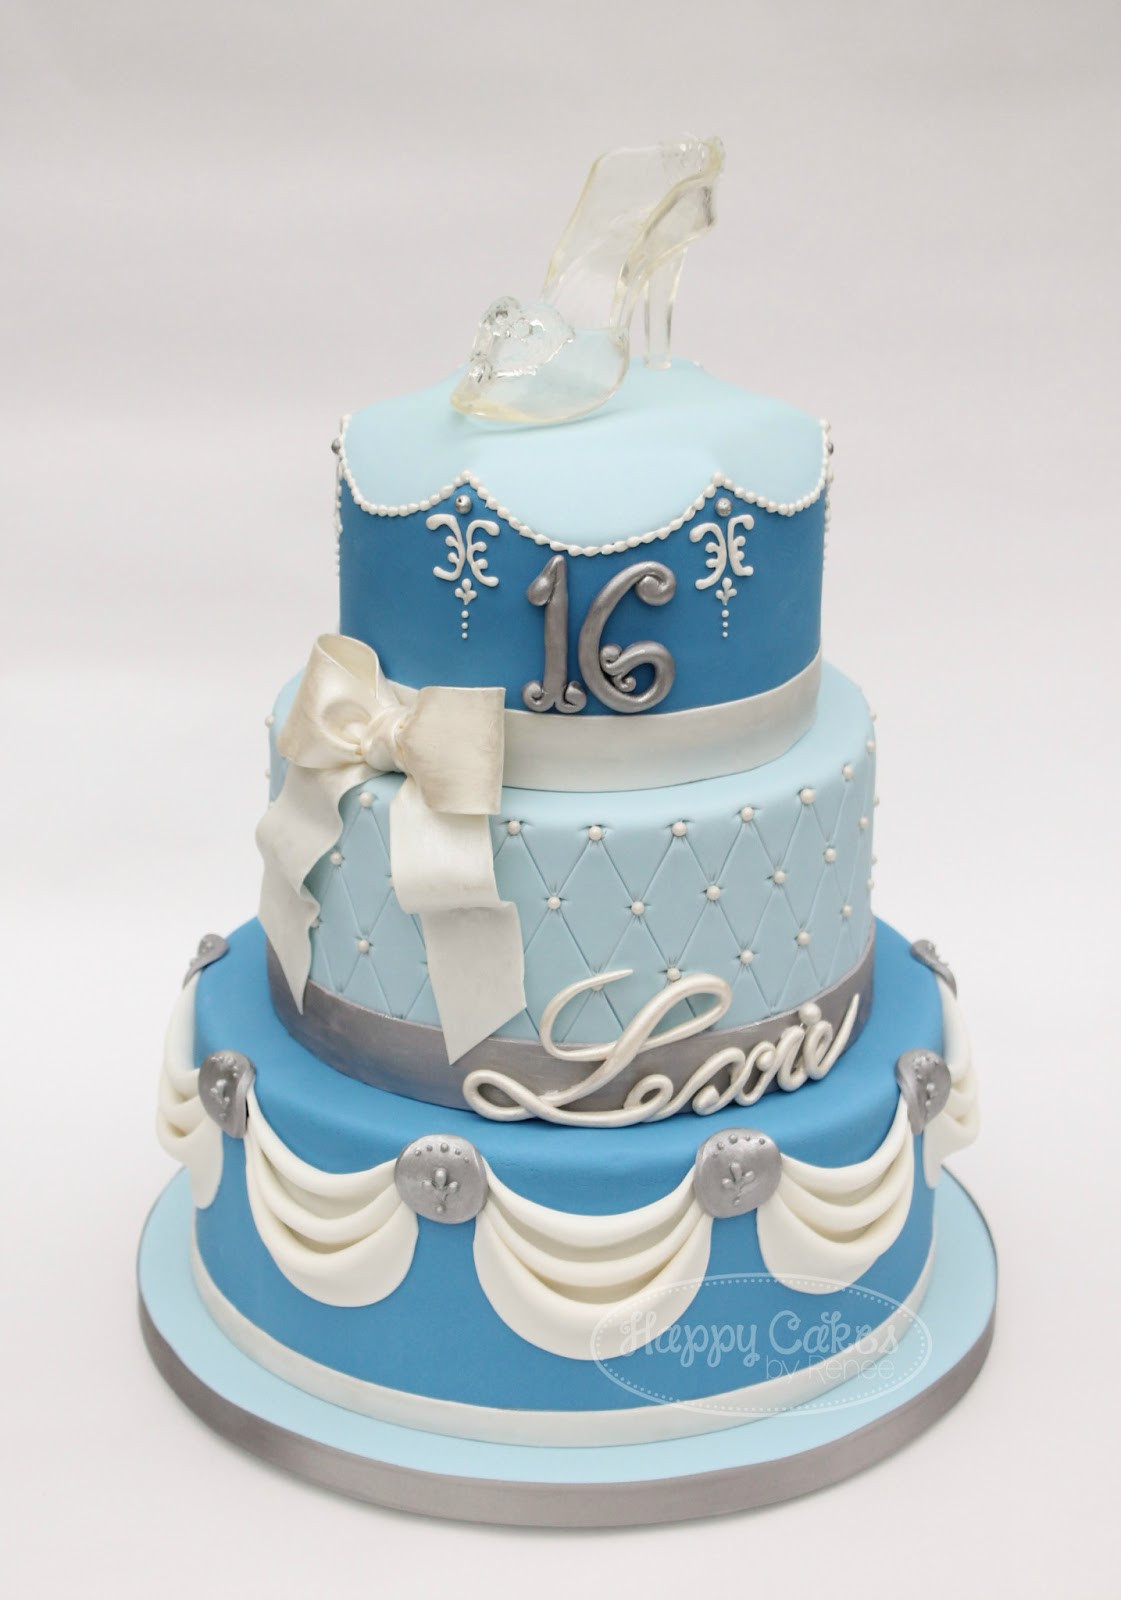 16 Birthday Cake
 Happy Cakes Bakes Cinderella Sweet 16 Birthday Cake